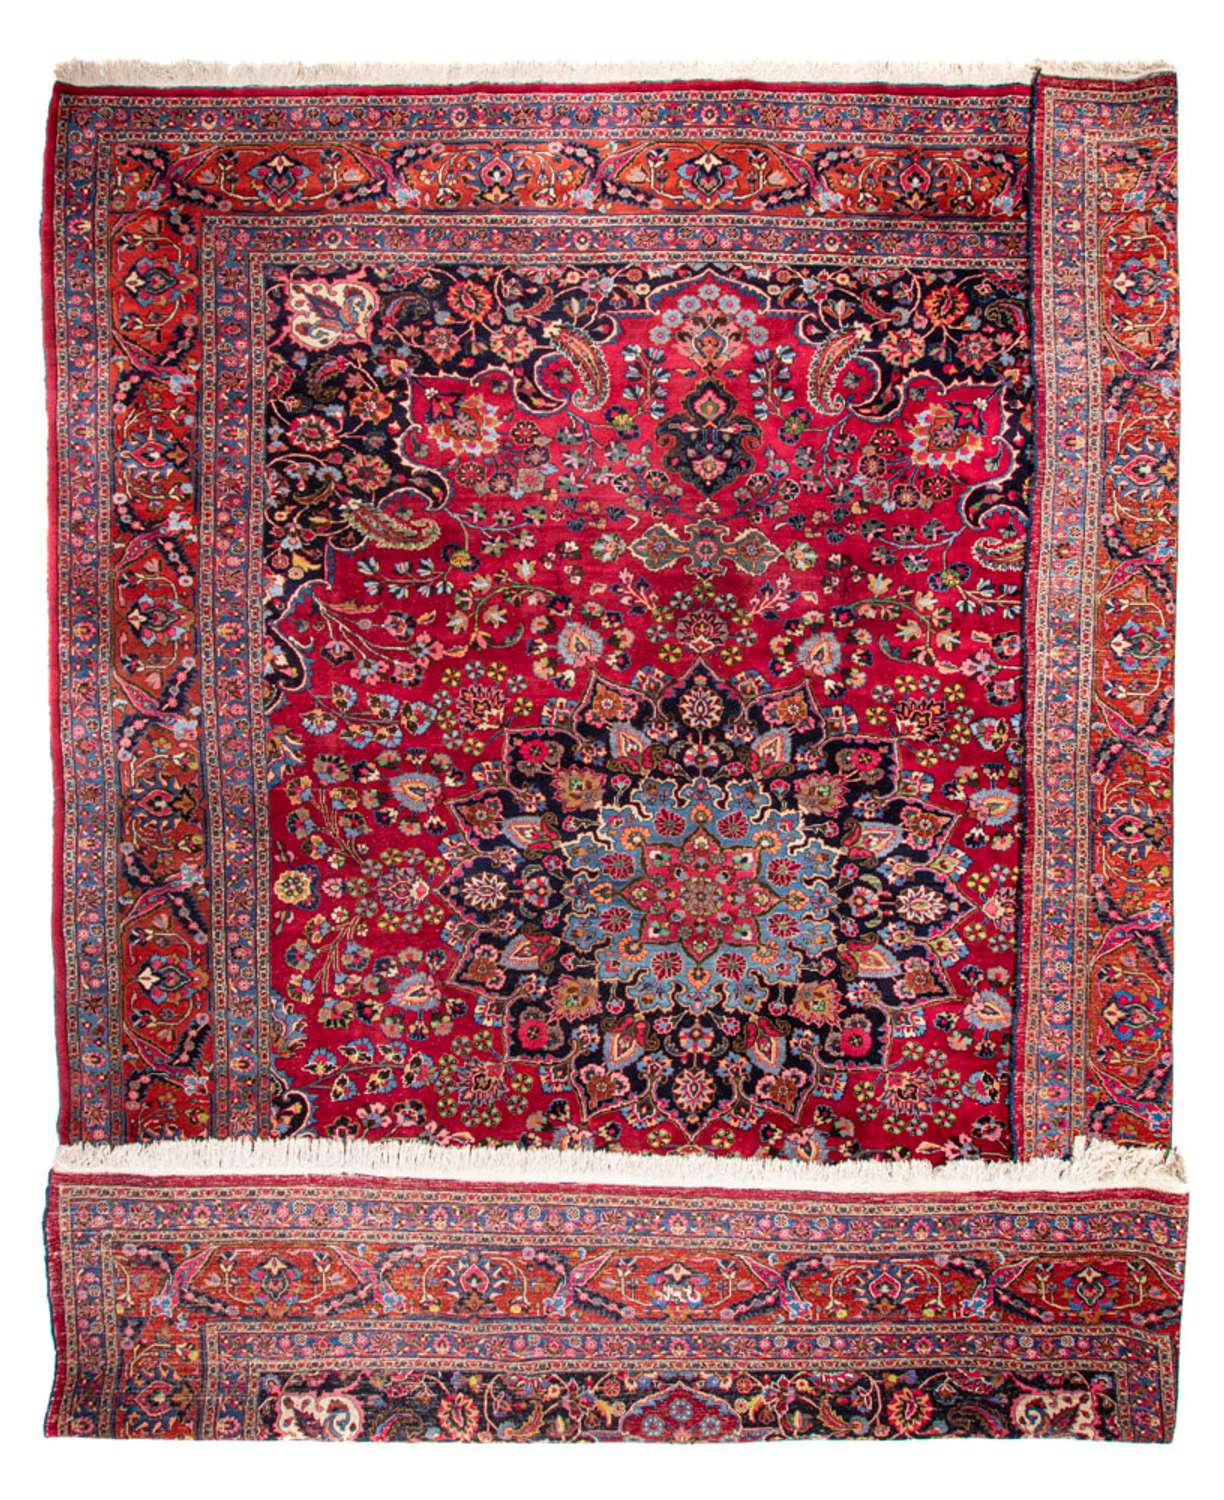 Tapis persan - Classique - 491 x 357 cm - rouge